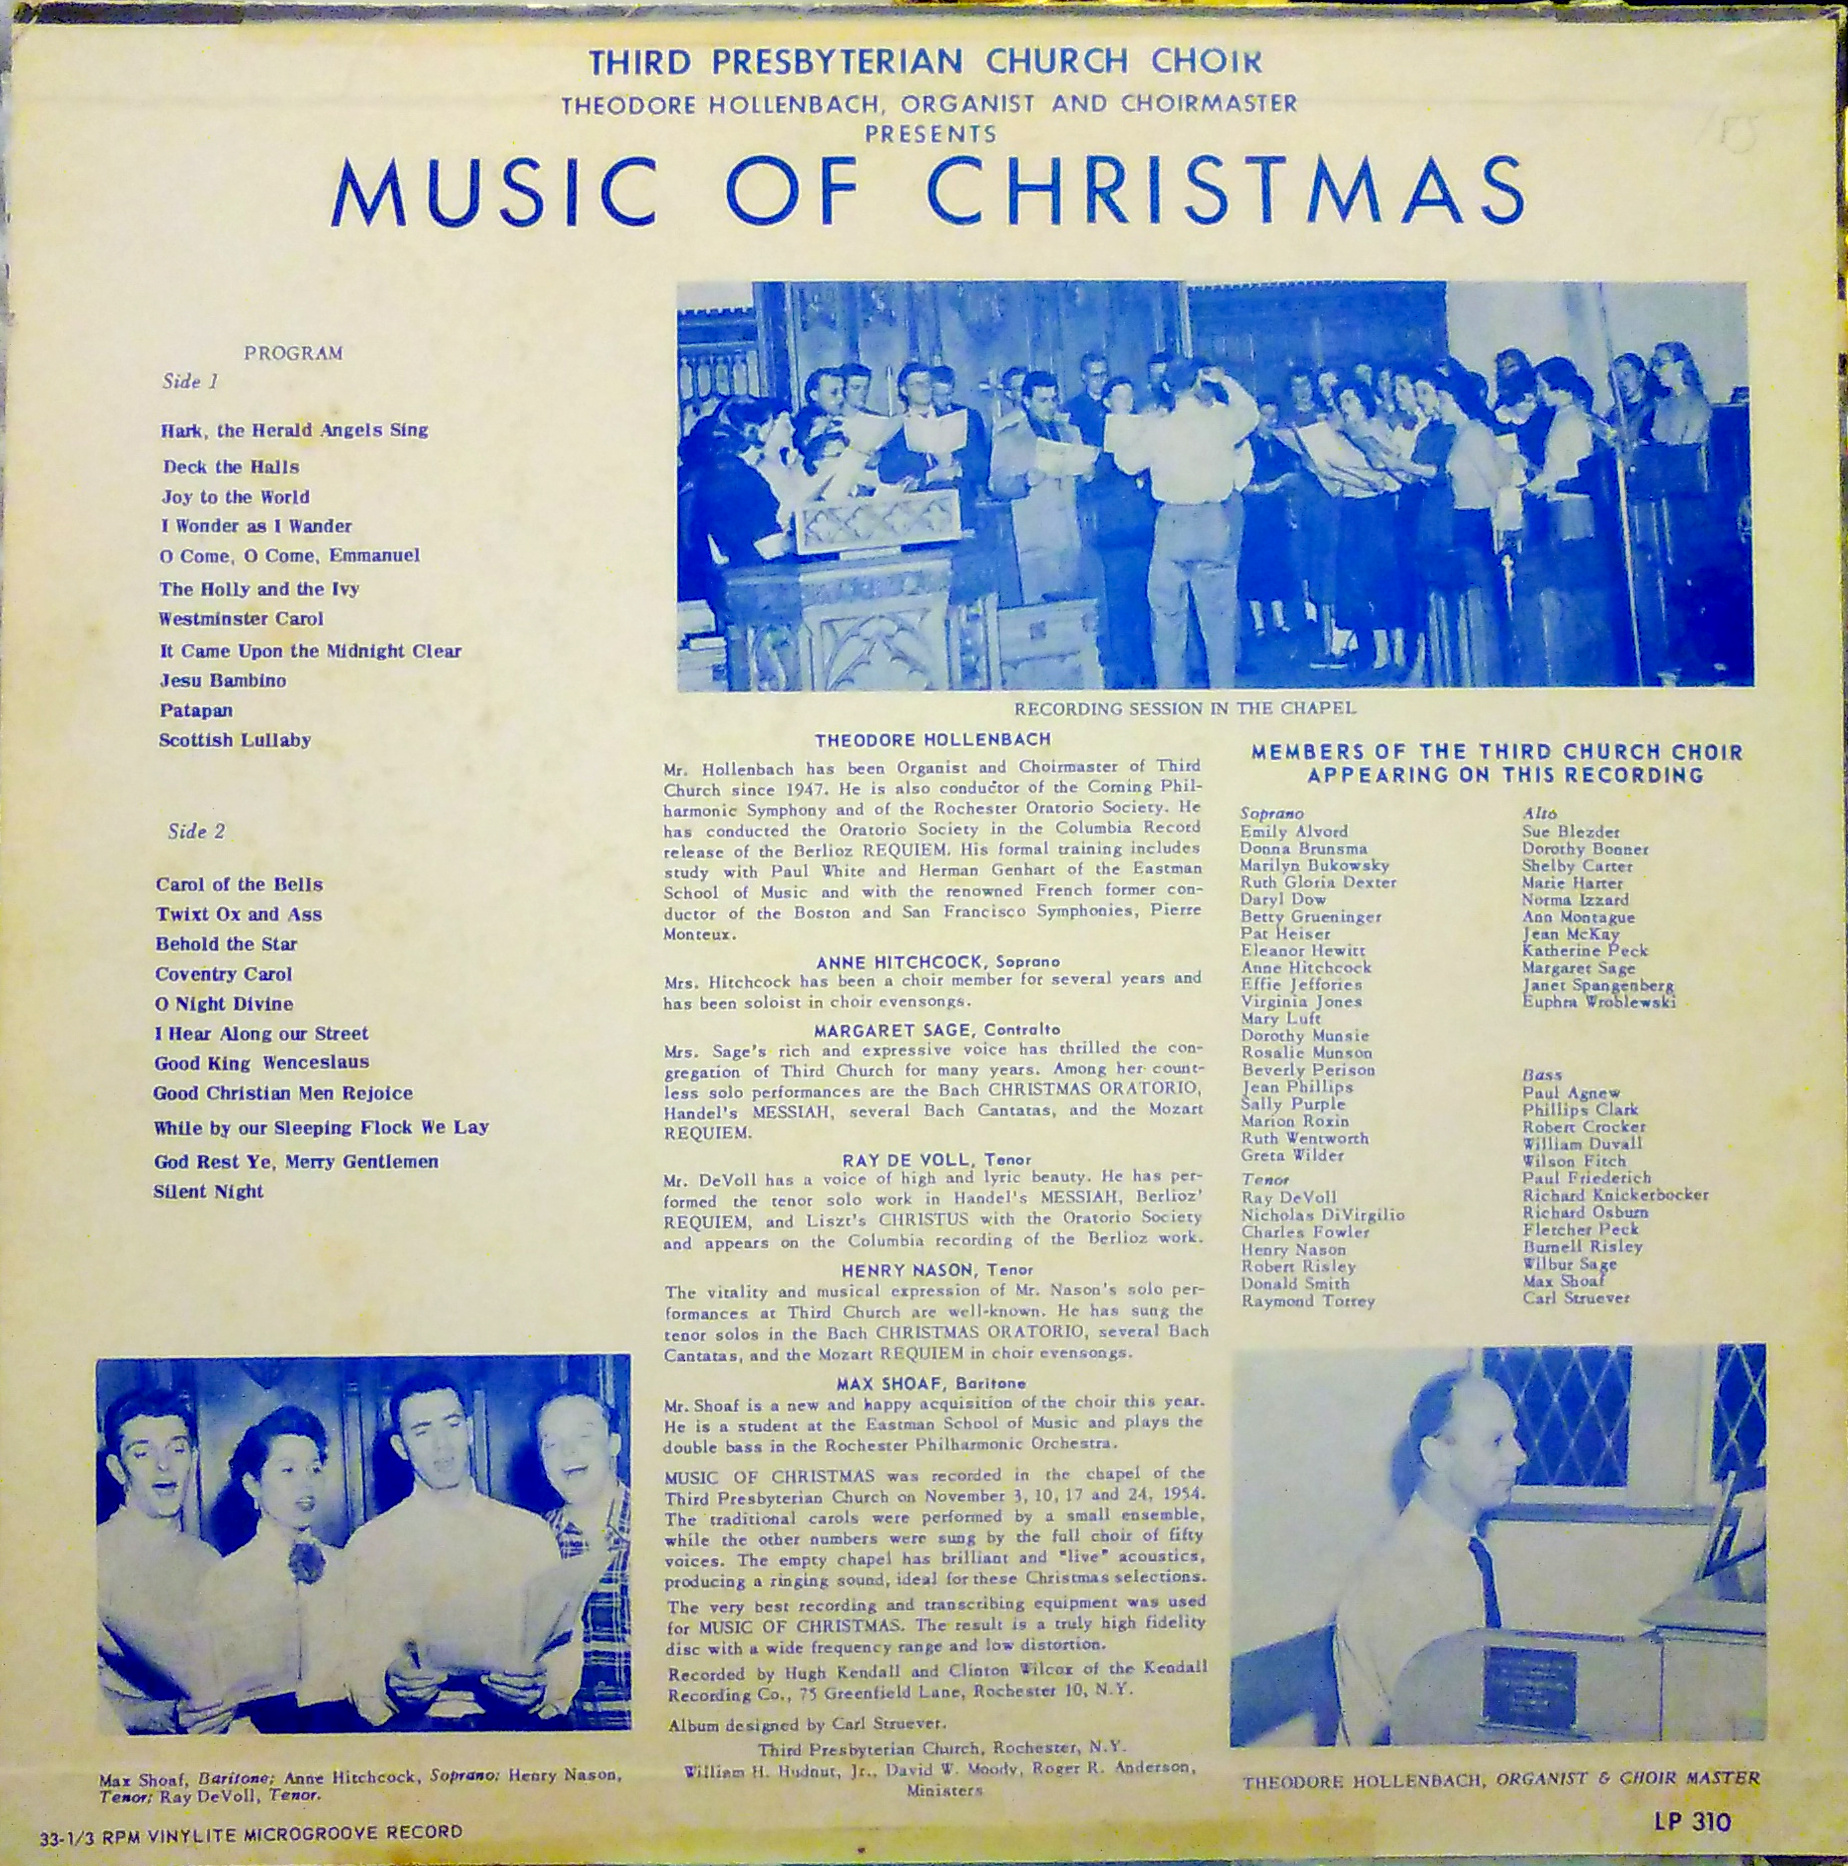 Music of Christmas, Third Presbyterian Church, Rochester, N.Y., side 2.